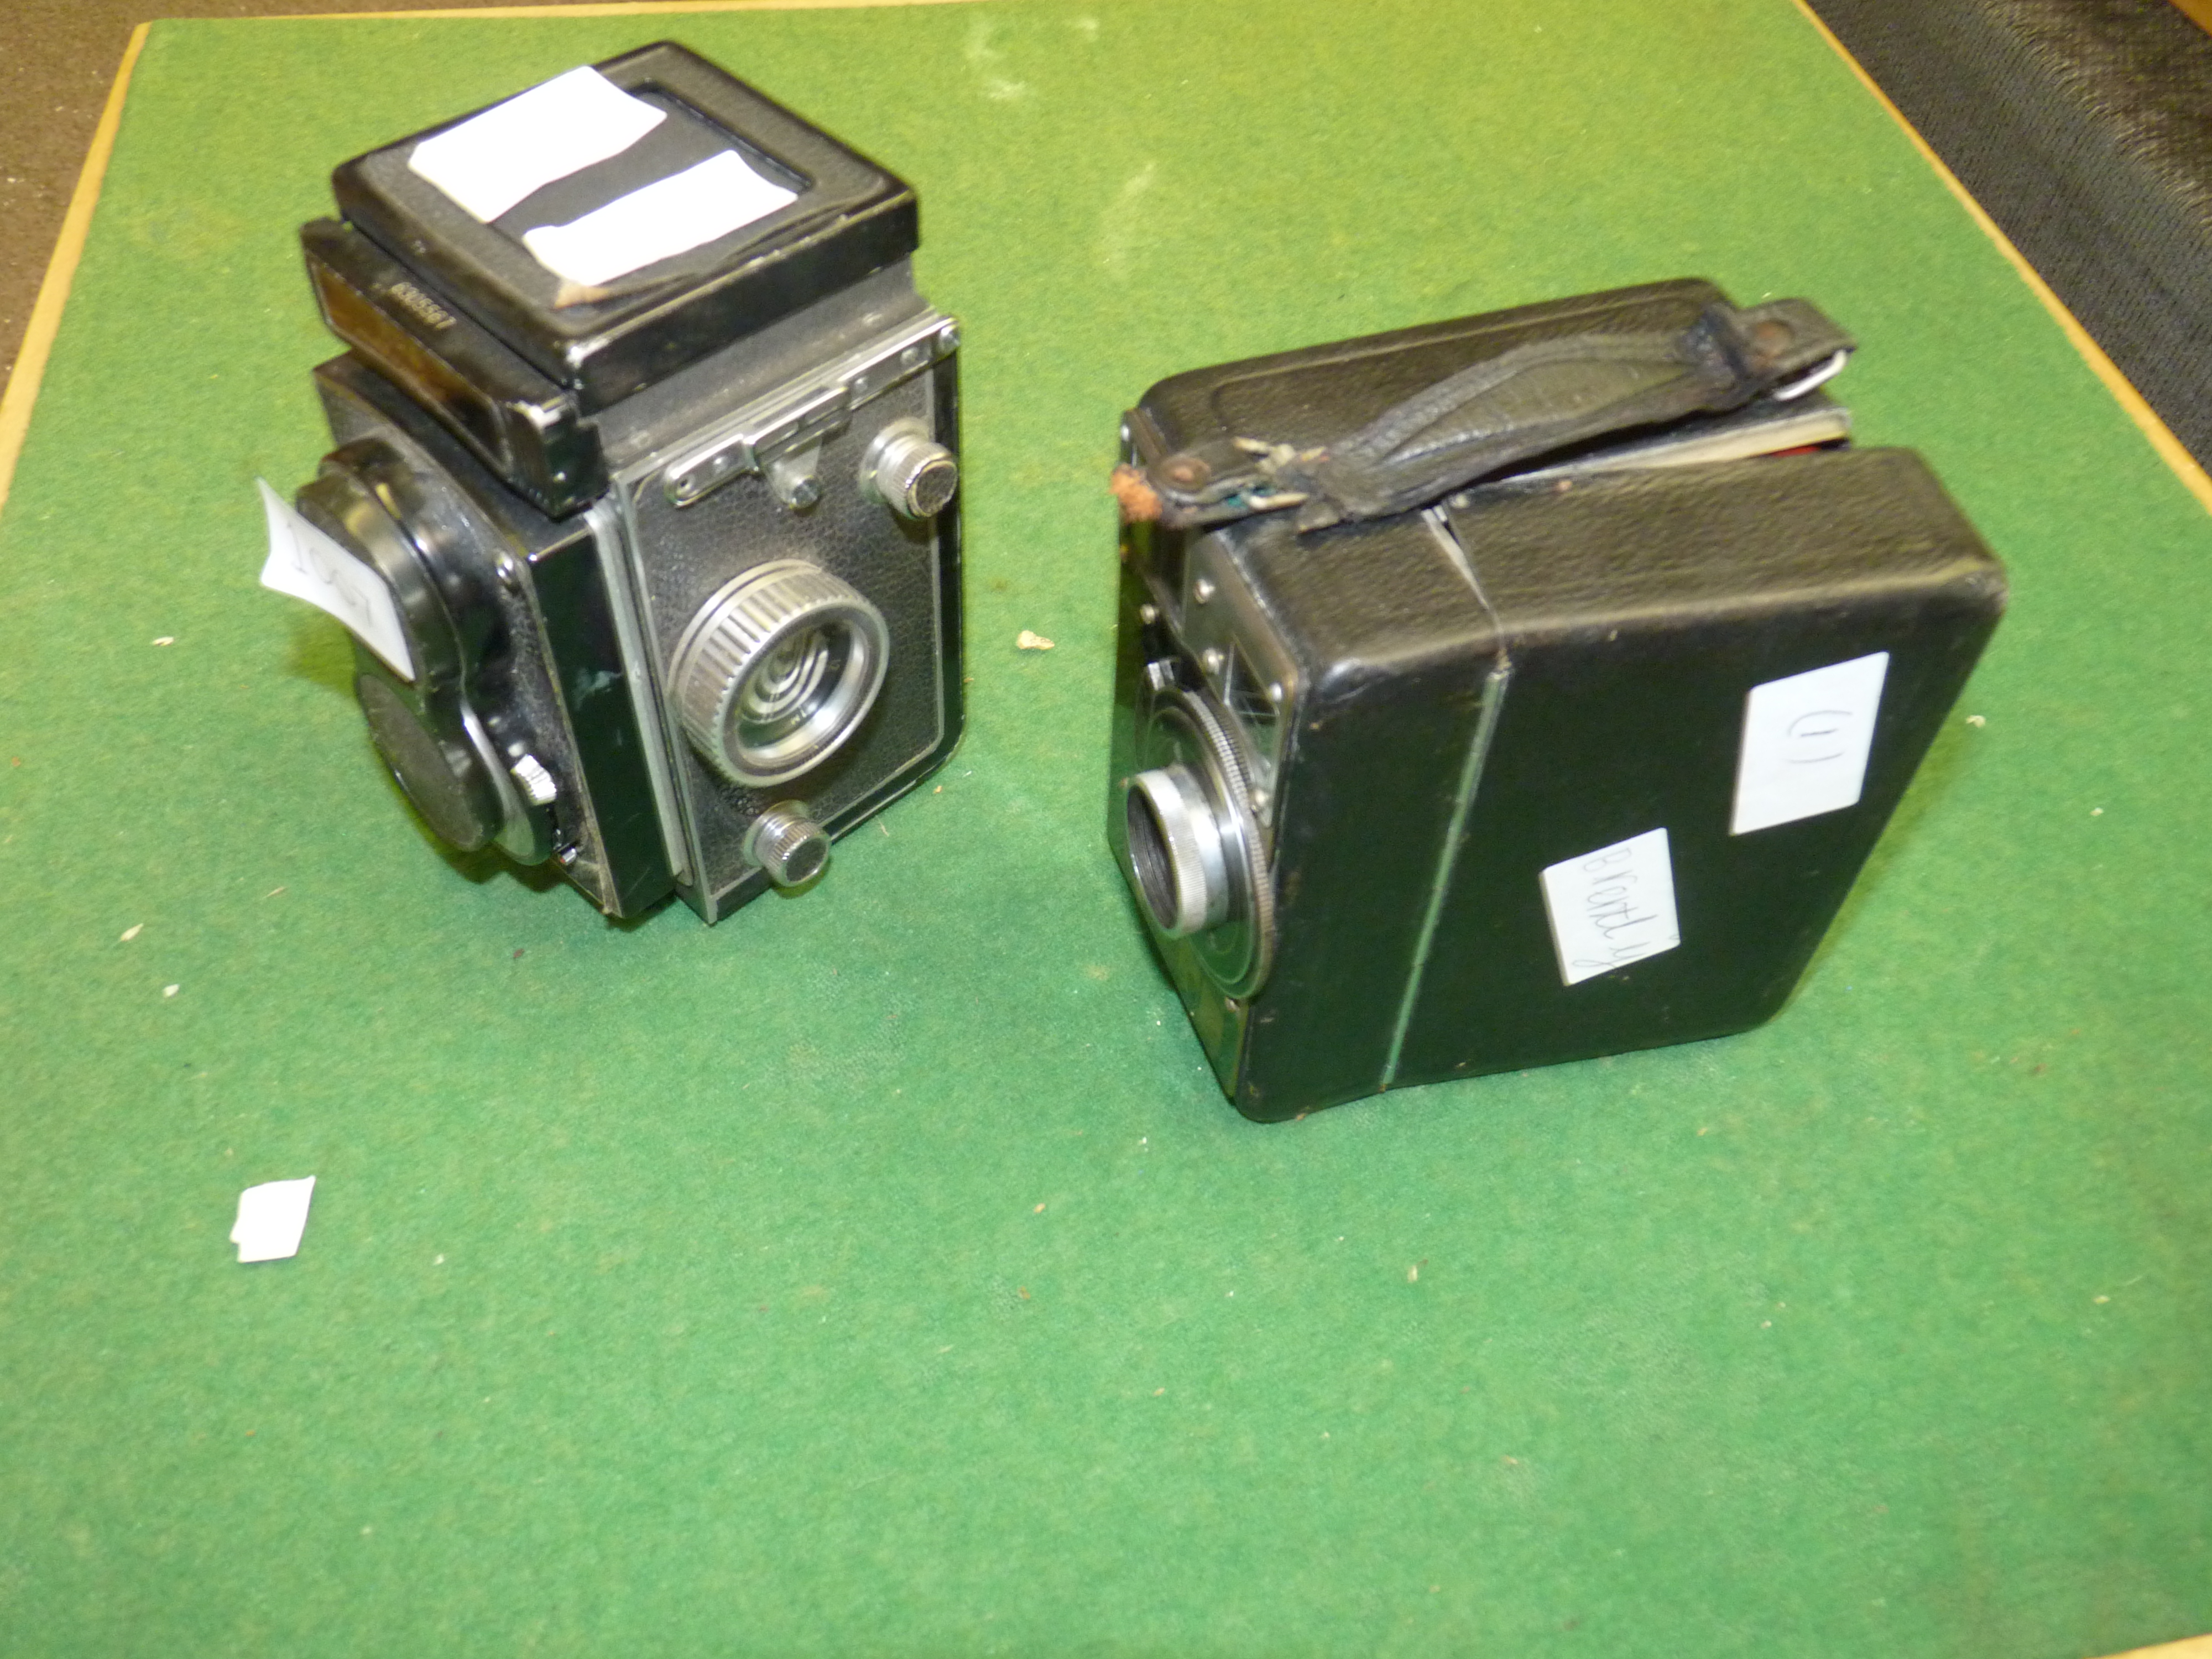 Siemens and Shanghai Box cameras